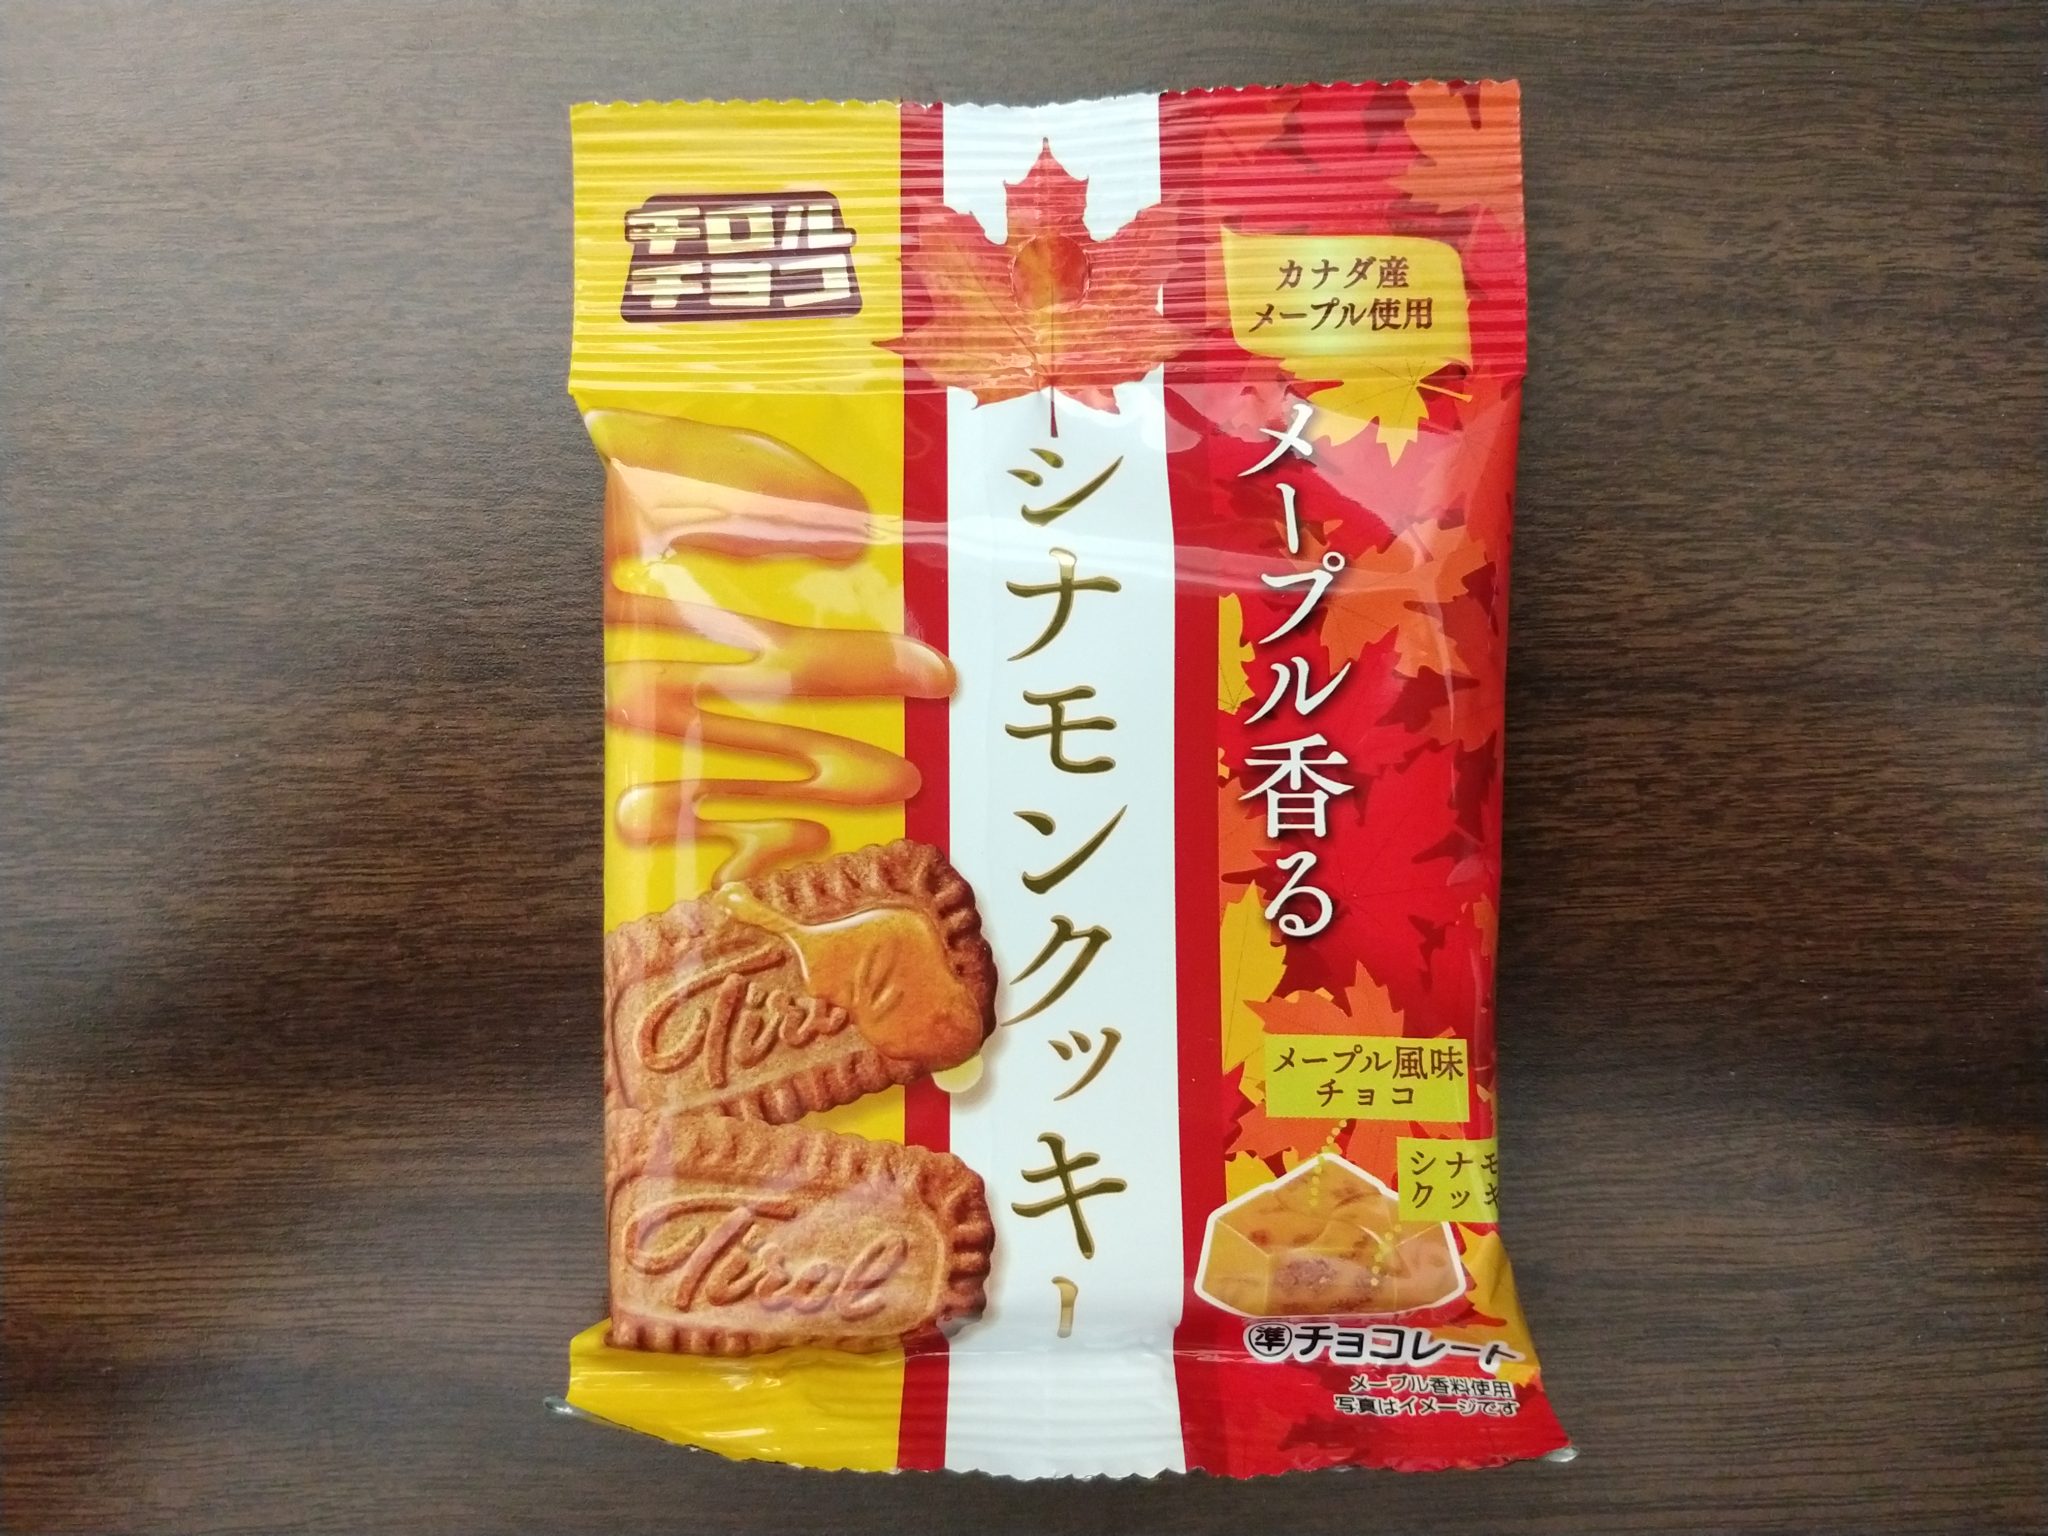 Tirol Chocolate – Cinnamon Maple Cookie